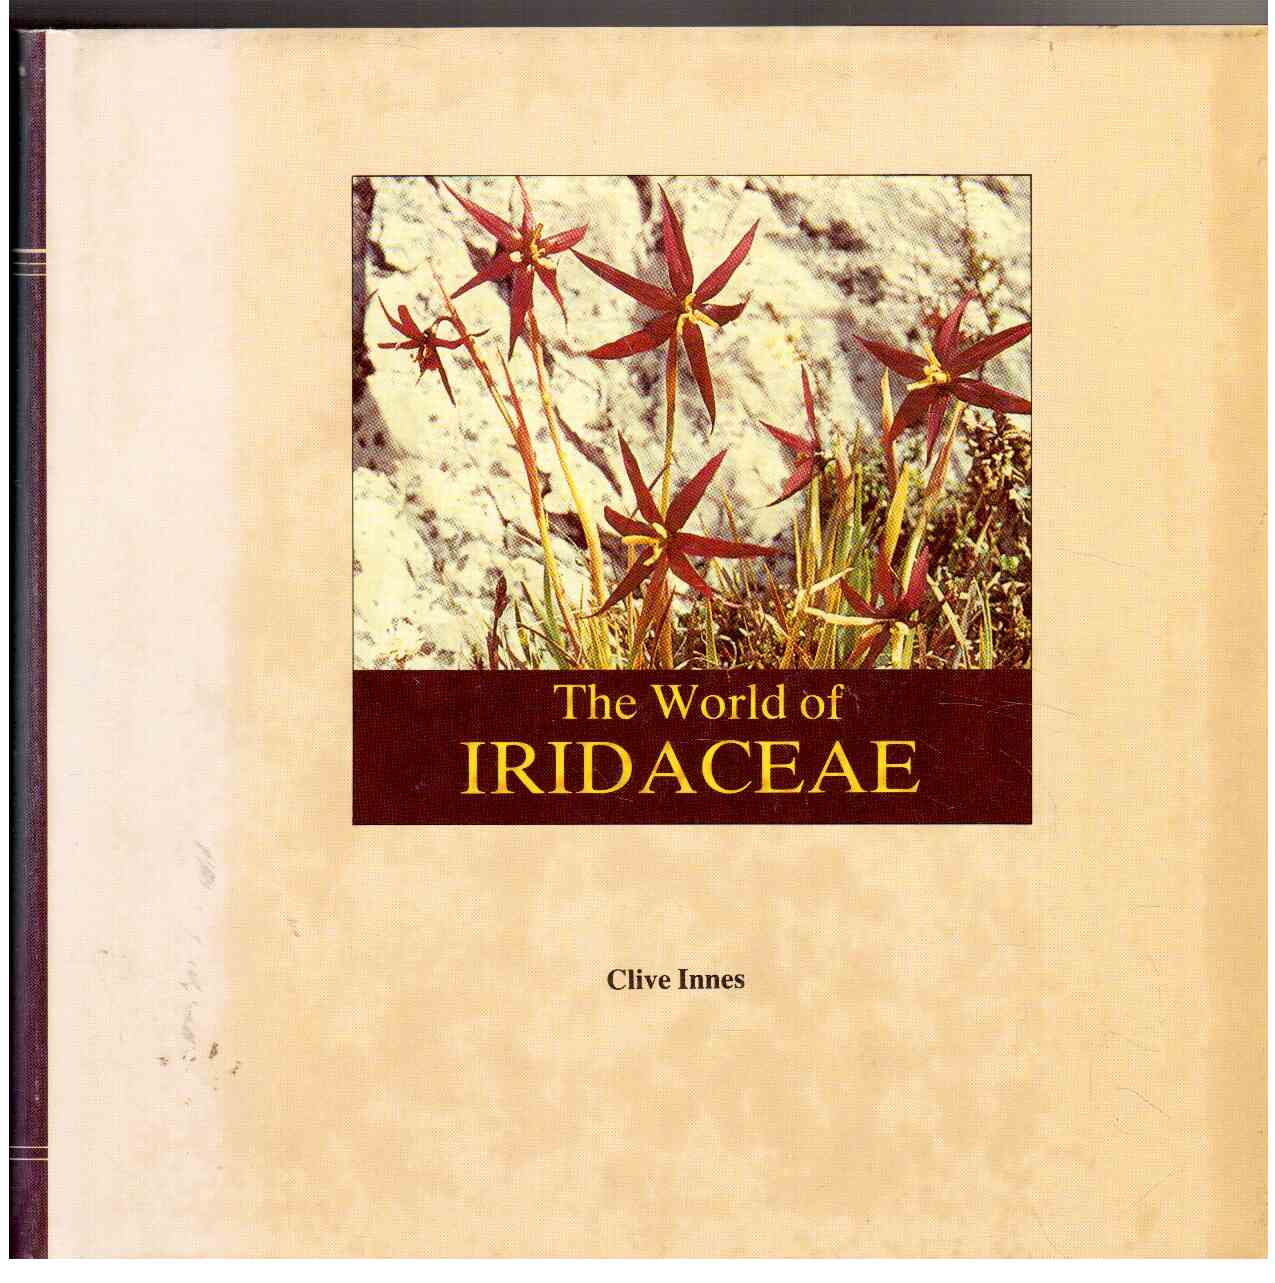 The world of Iridaceae.